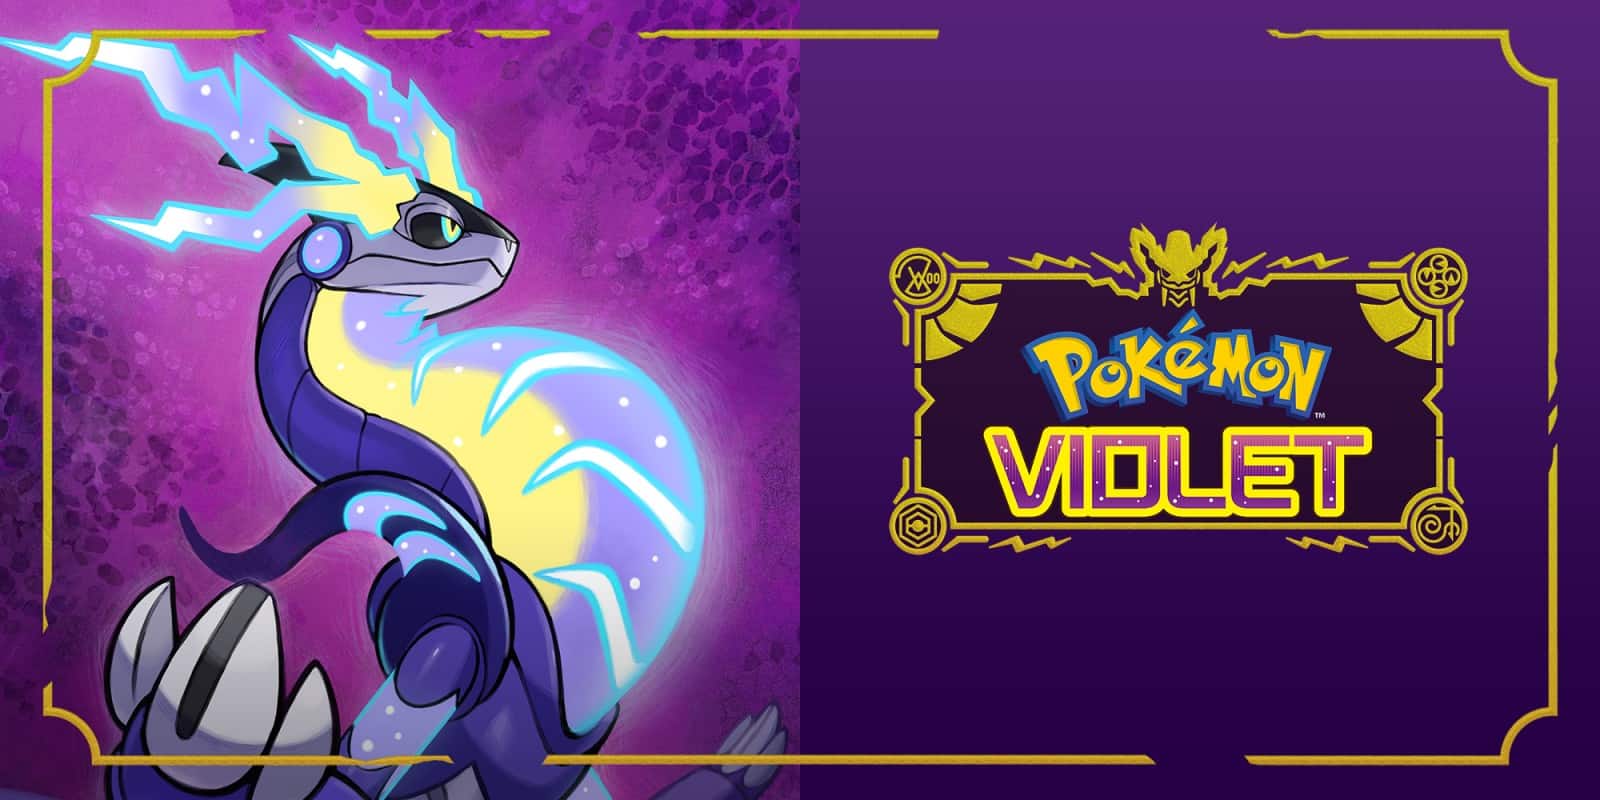 A promotional image for Pokemon Violet.